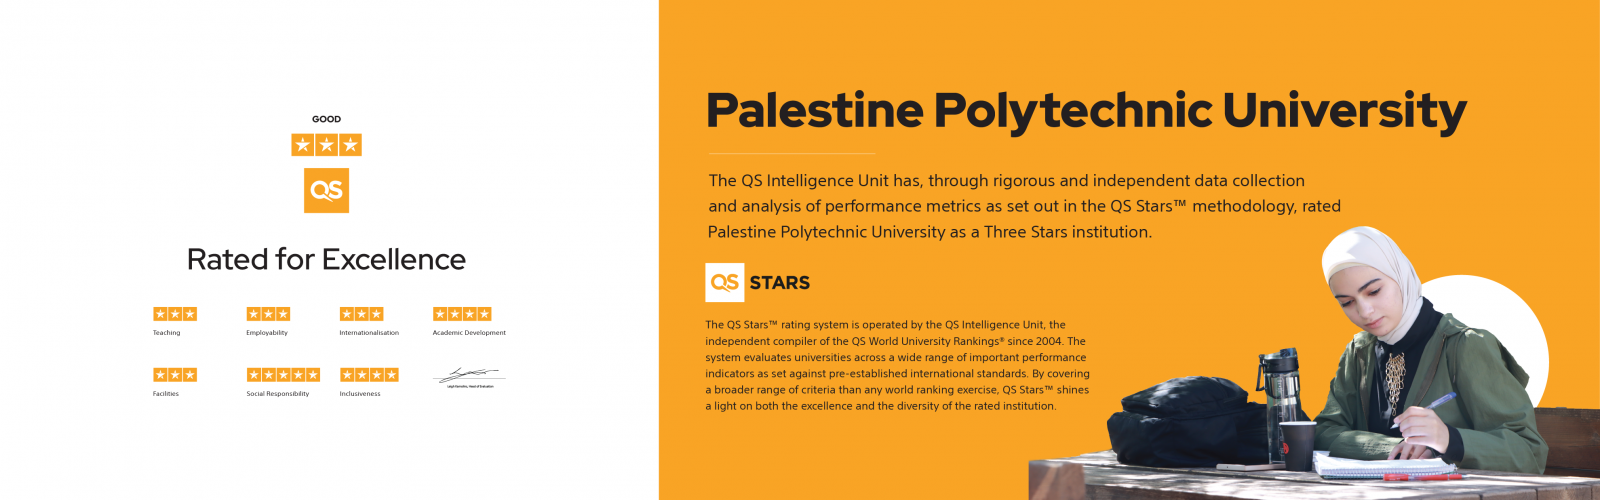 Palestine Polytechnic University (PPU) - ٍَQS 3 stars 